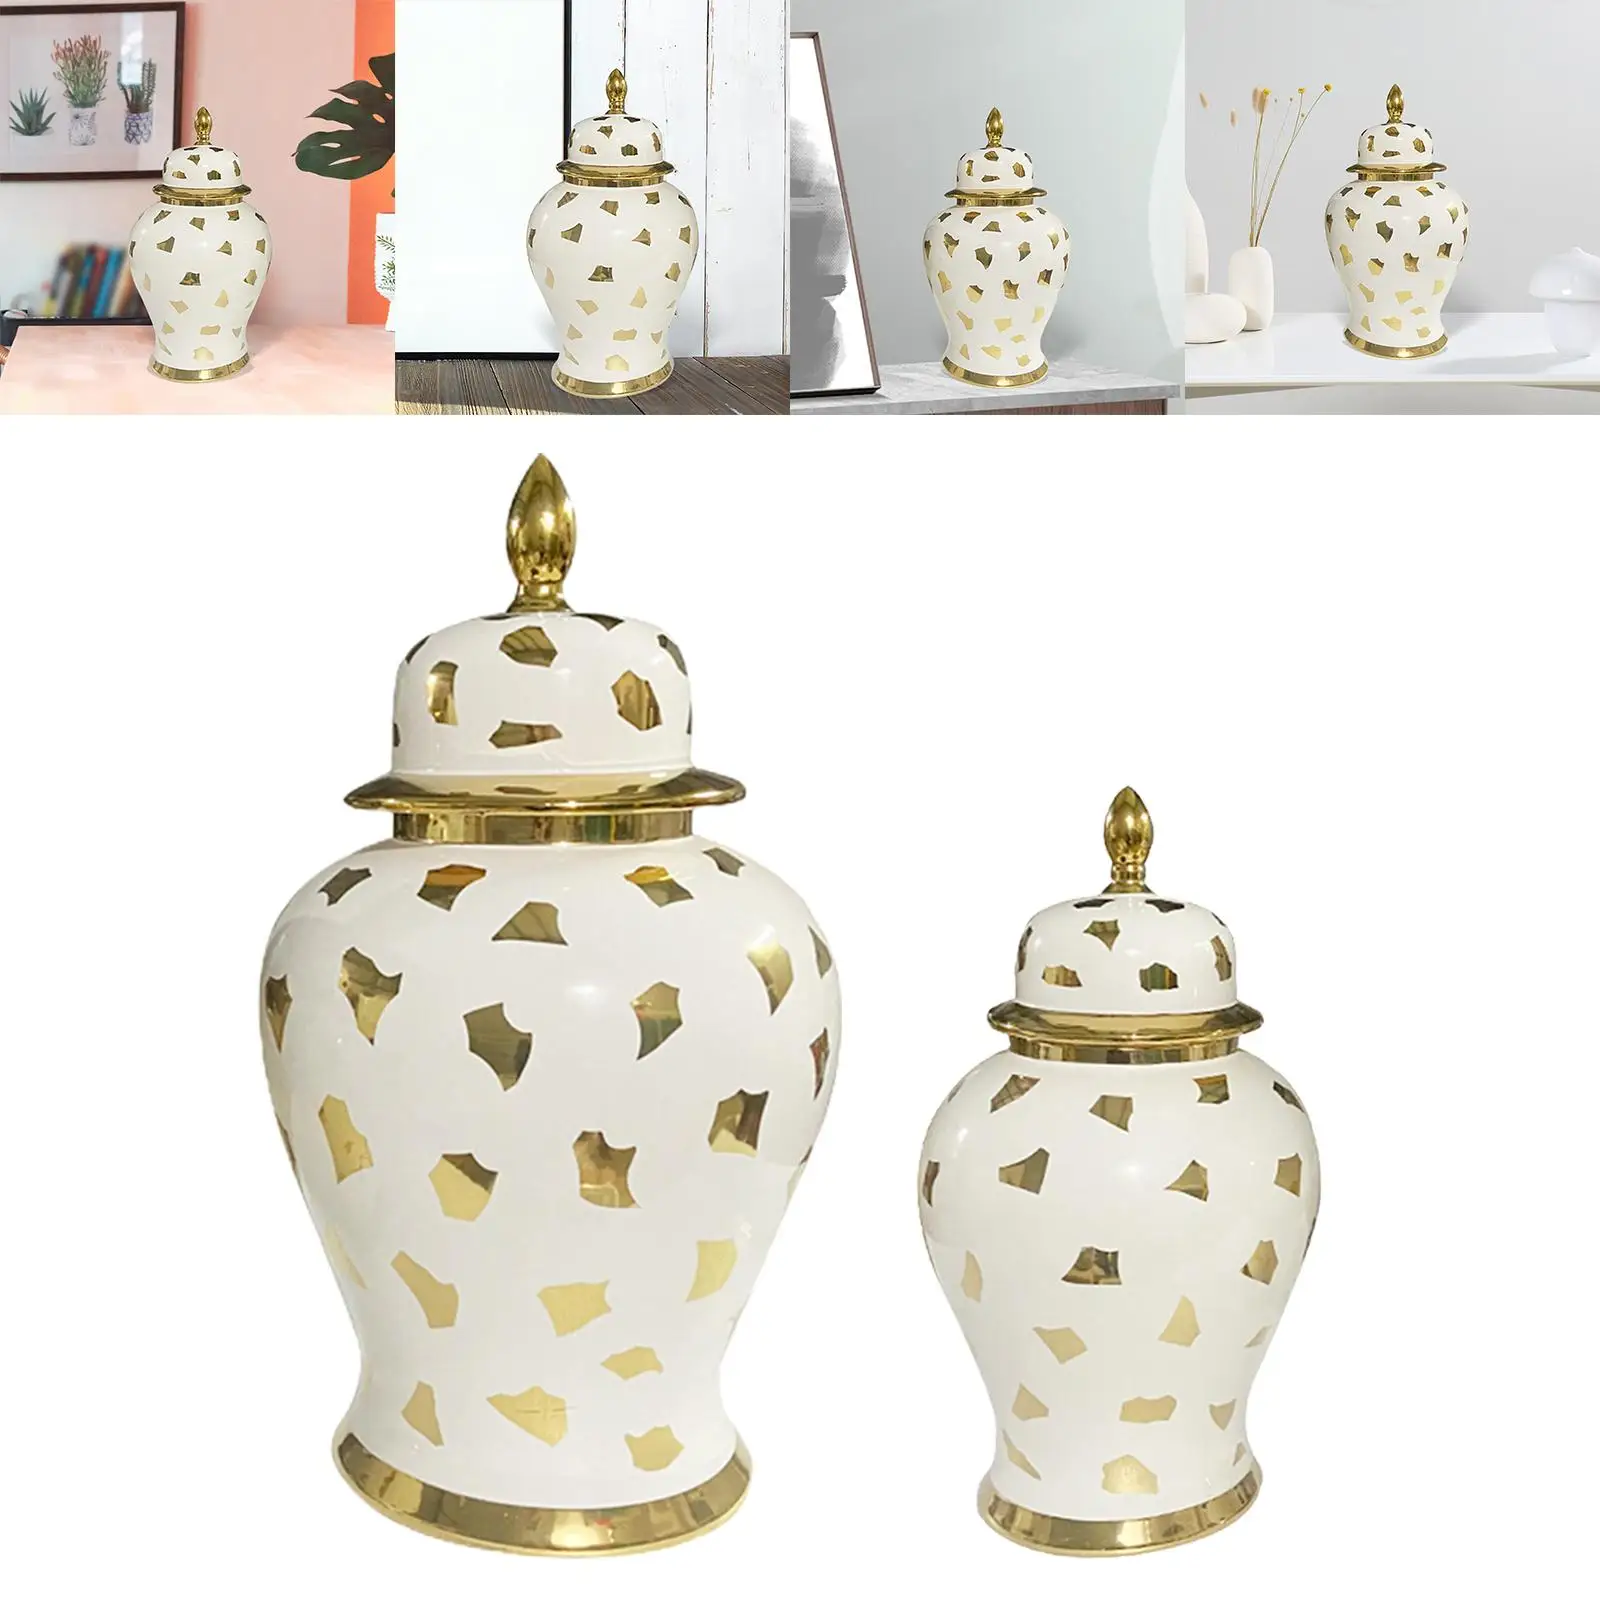 Classical Ceramic Ginger Jar Flower Vase Table Centerpiece for Home Decoration Gift